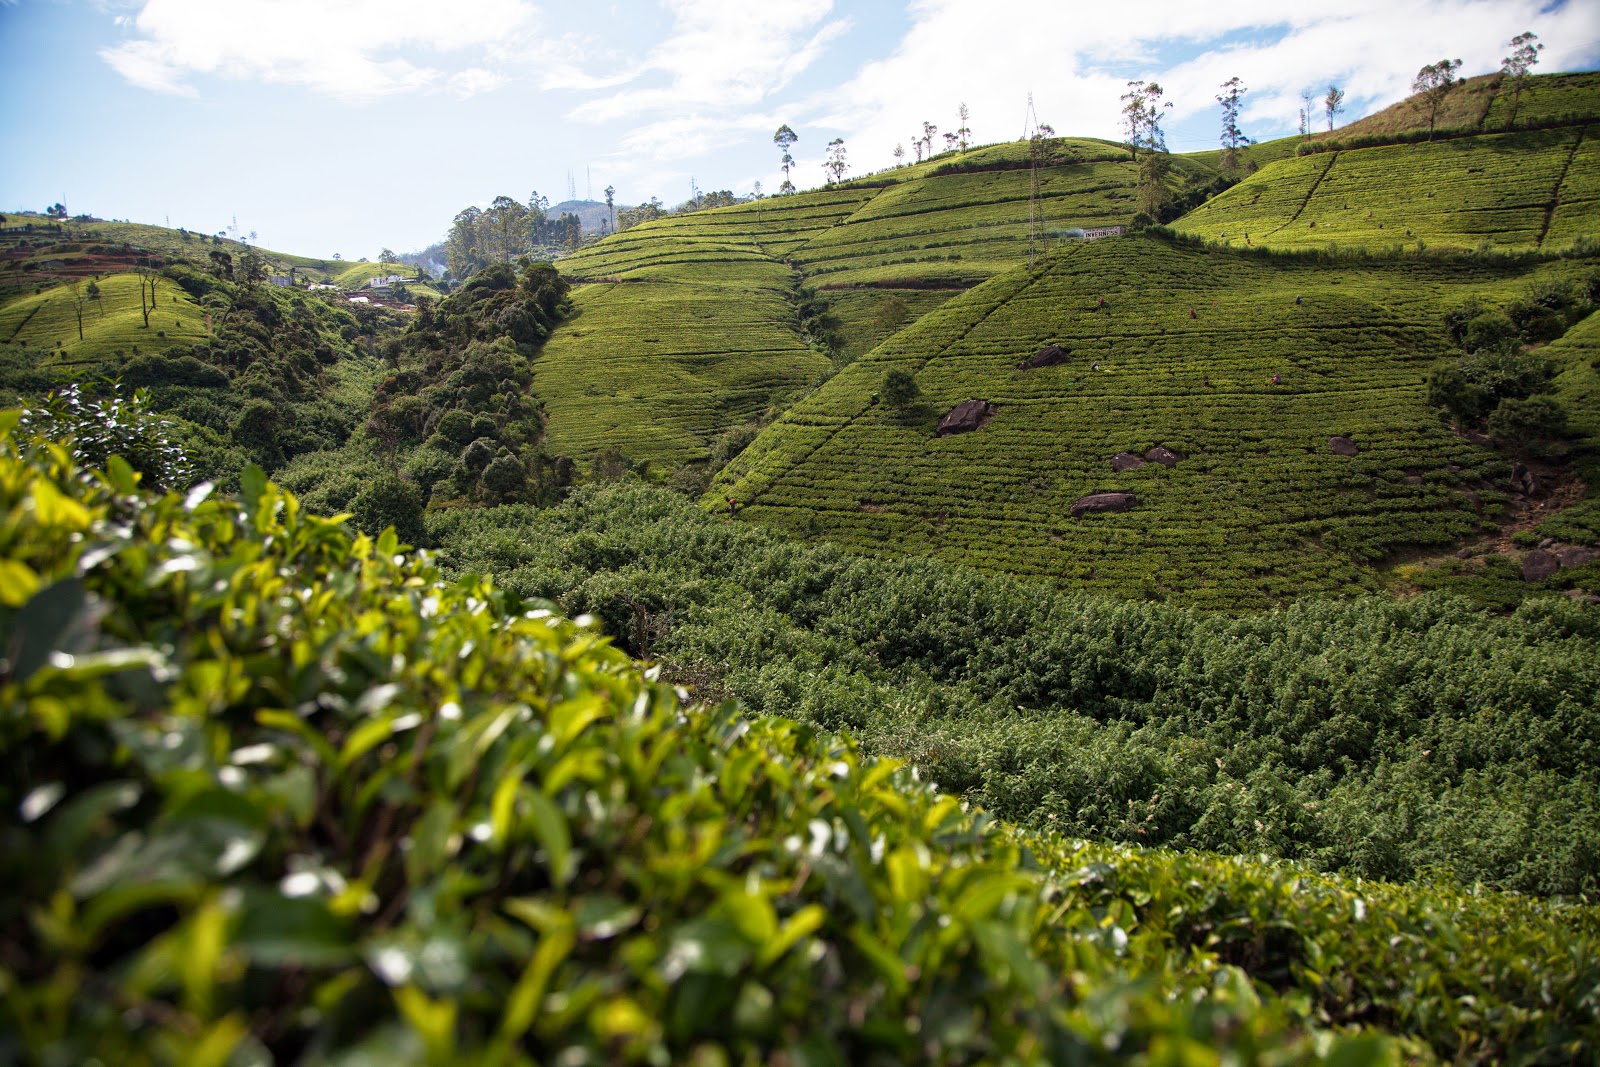 Шри ланка производство. Шри Ланка чайные плантации. Шри Ланка плантации чая. Чайная фабрика и плантации в Нувара Элии. Шри Ланка чайная плантация на закате.